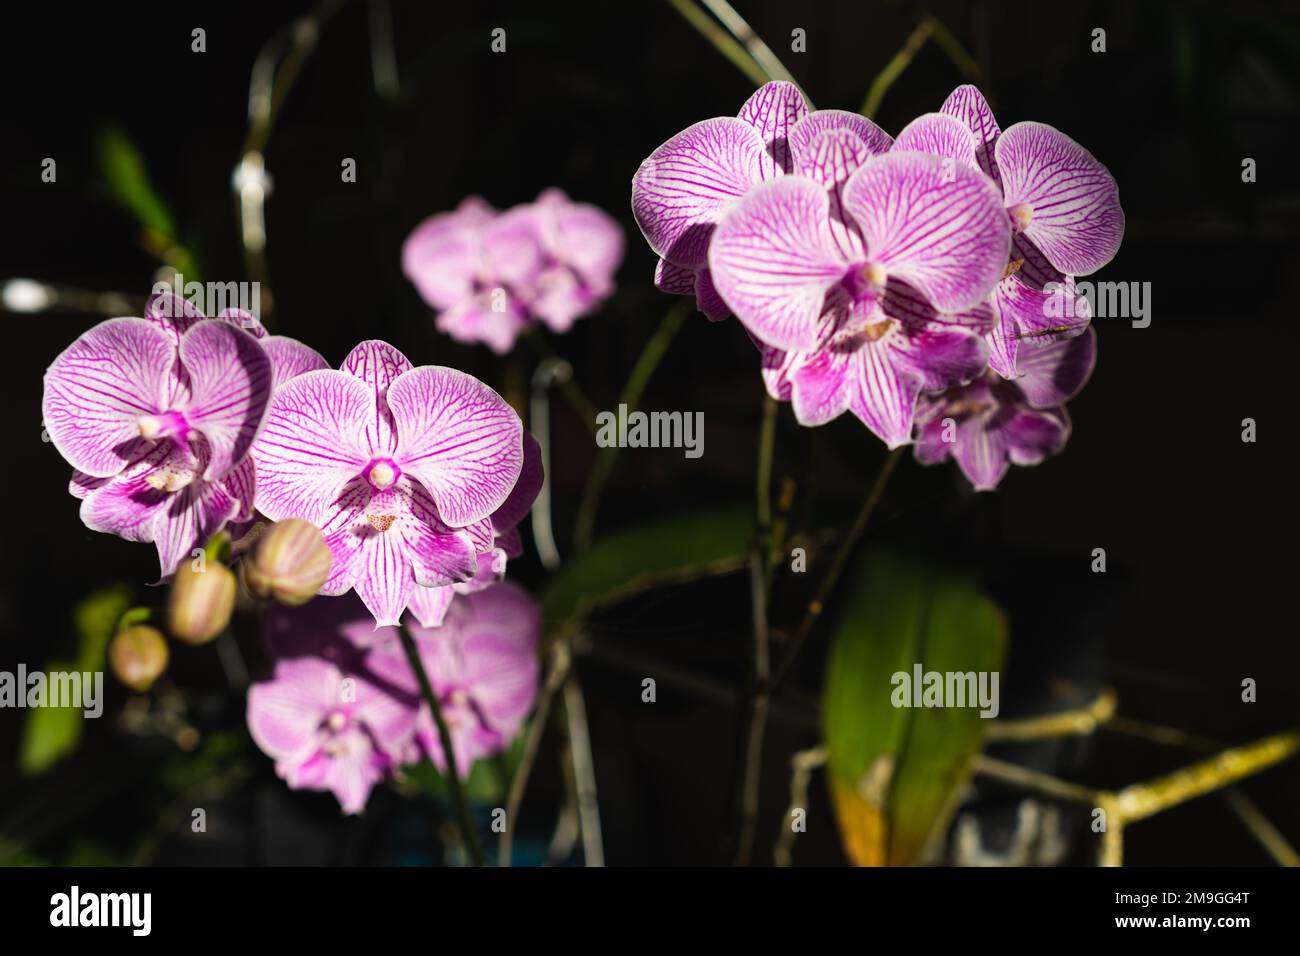 Indonesian Anggrek bulan or blooming and florets bud purple orchid flowers (Phalaenopsis amabilis) selective focus. Stock Photo